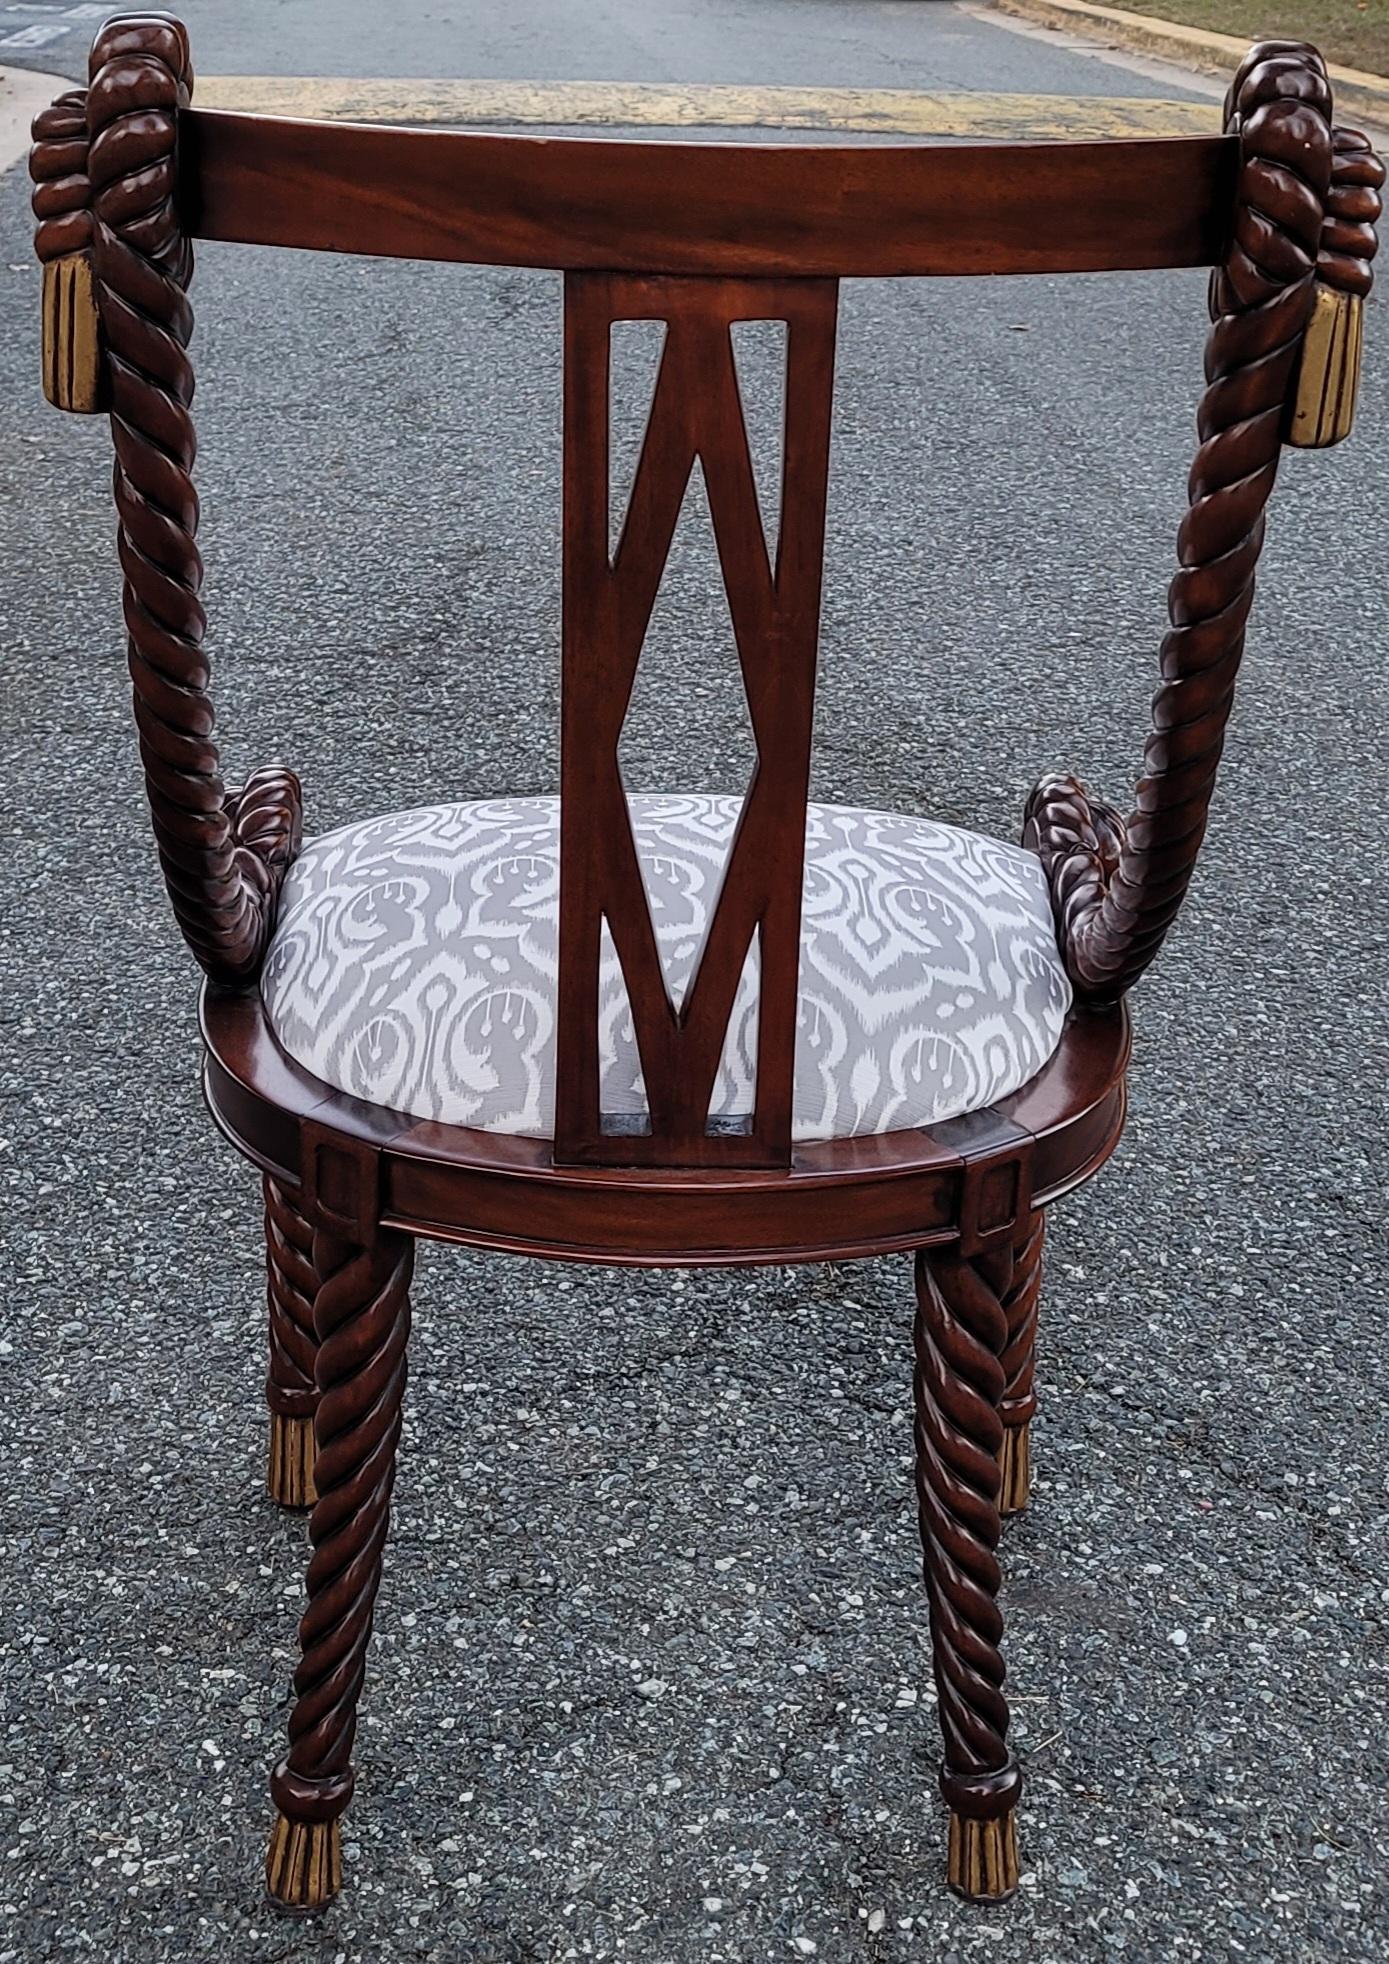 Australian Large Biedermeier Barley Twist Rope Parcel Gilt Carved Side Chairs, a Pair For Sale